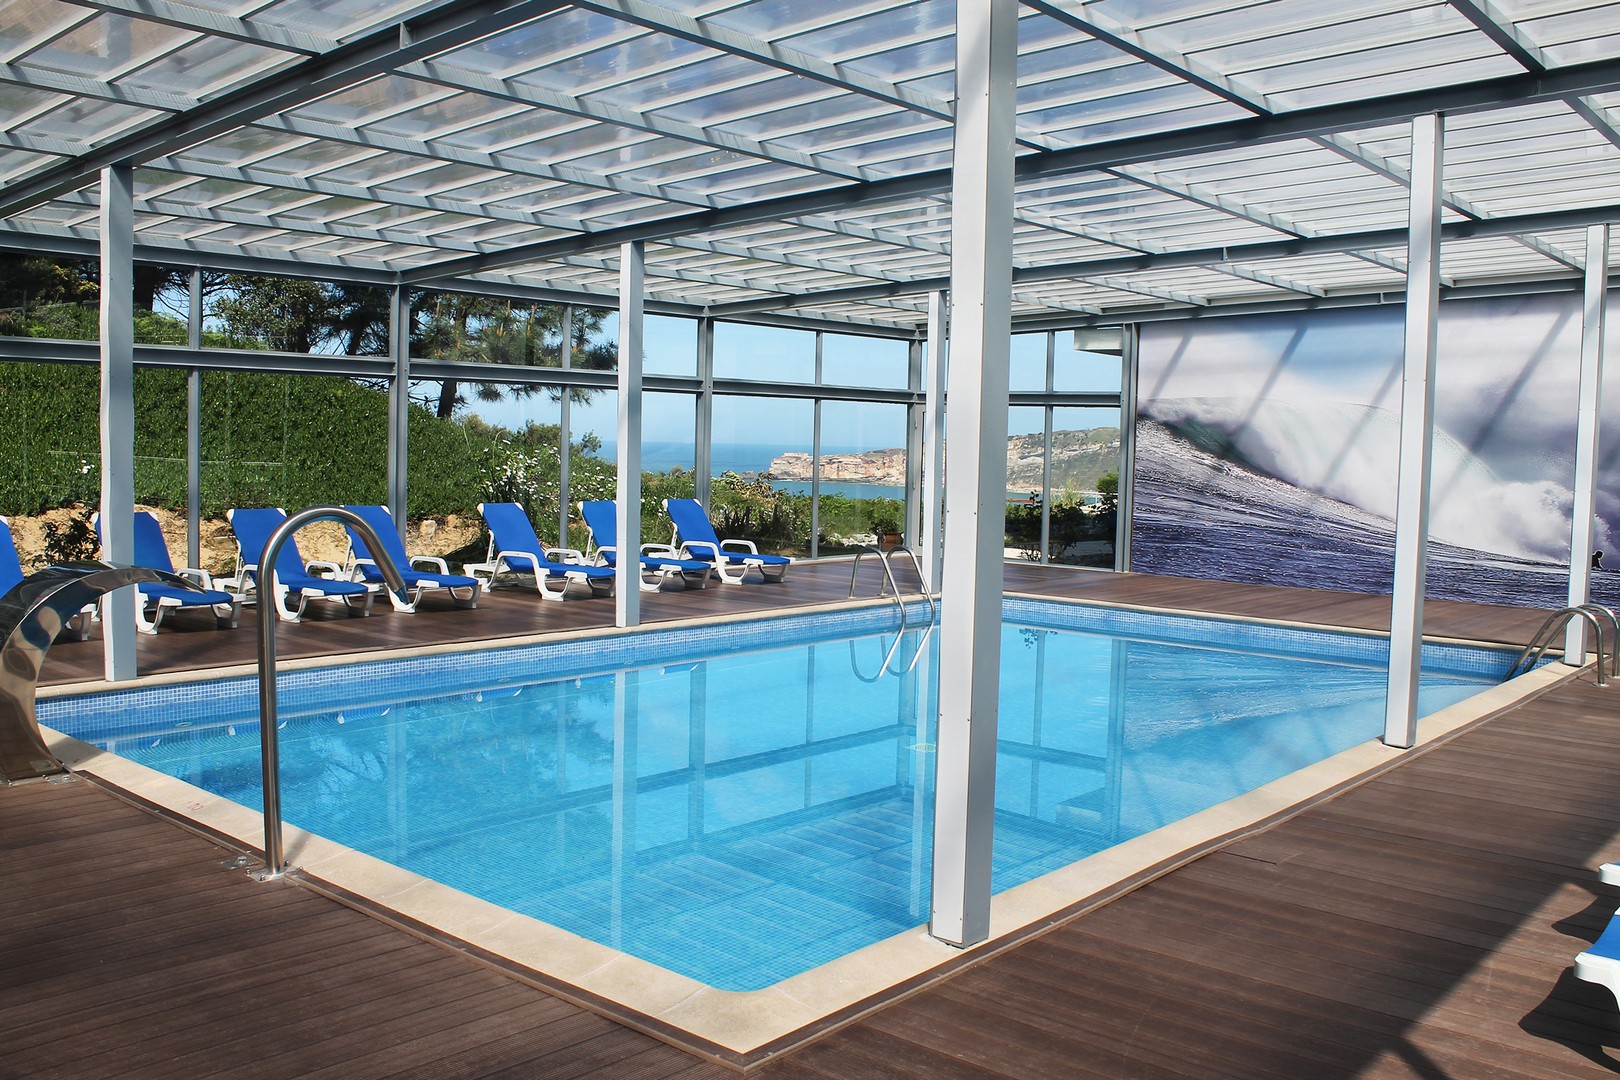 Hotel Miramar Sul Nazare piscina coberta